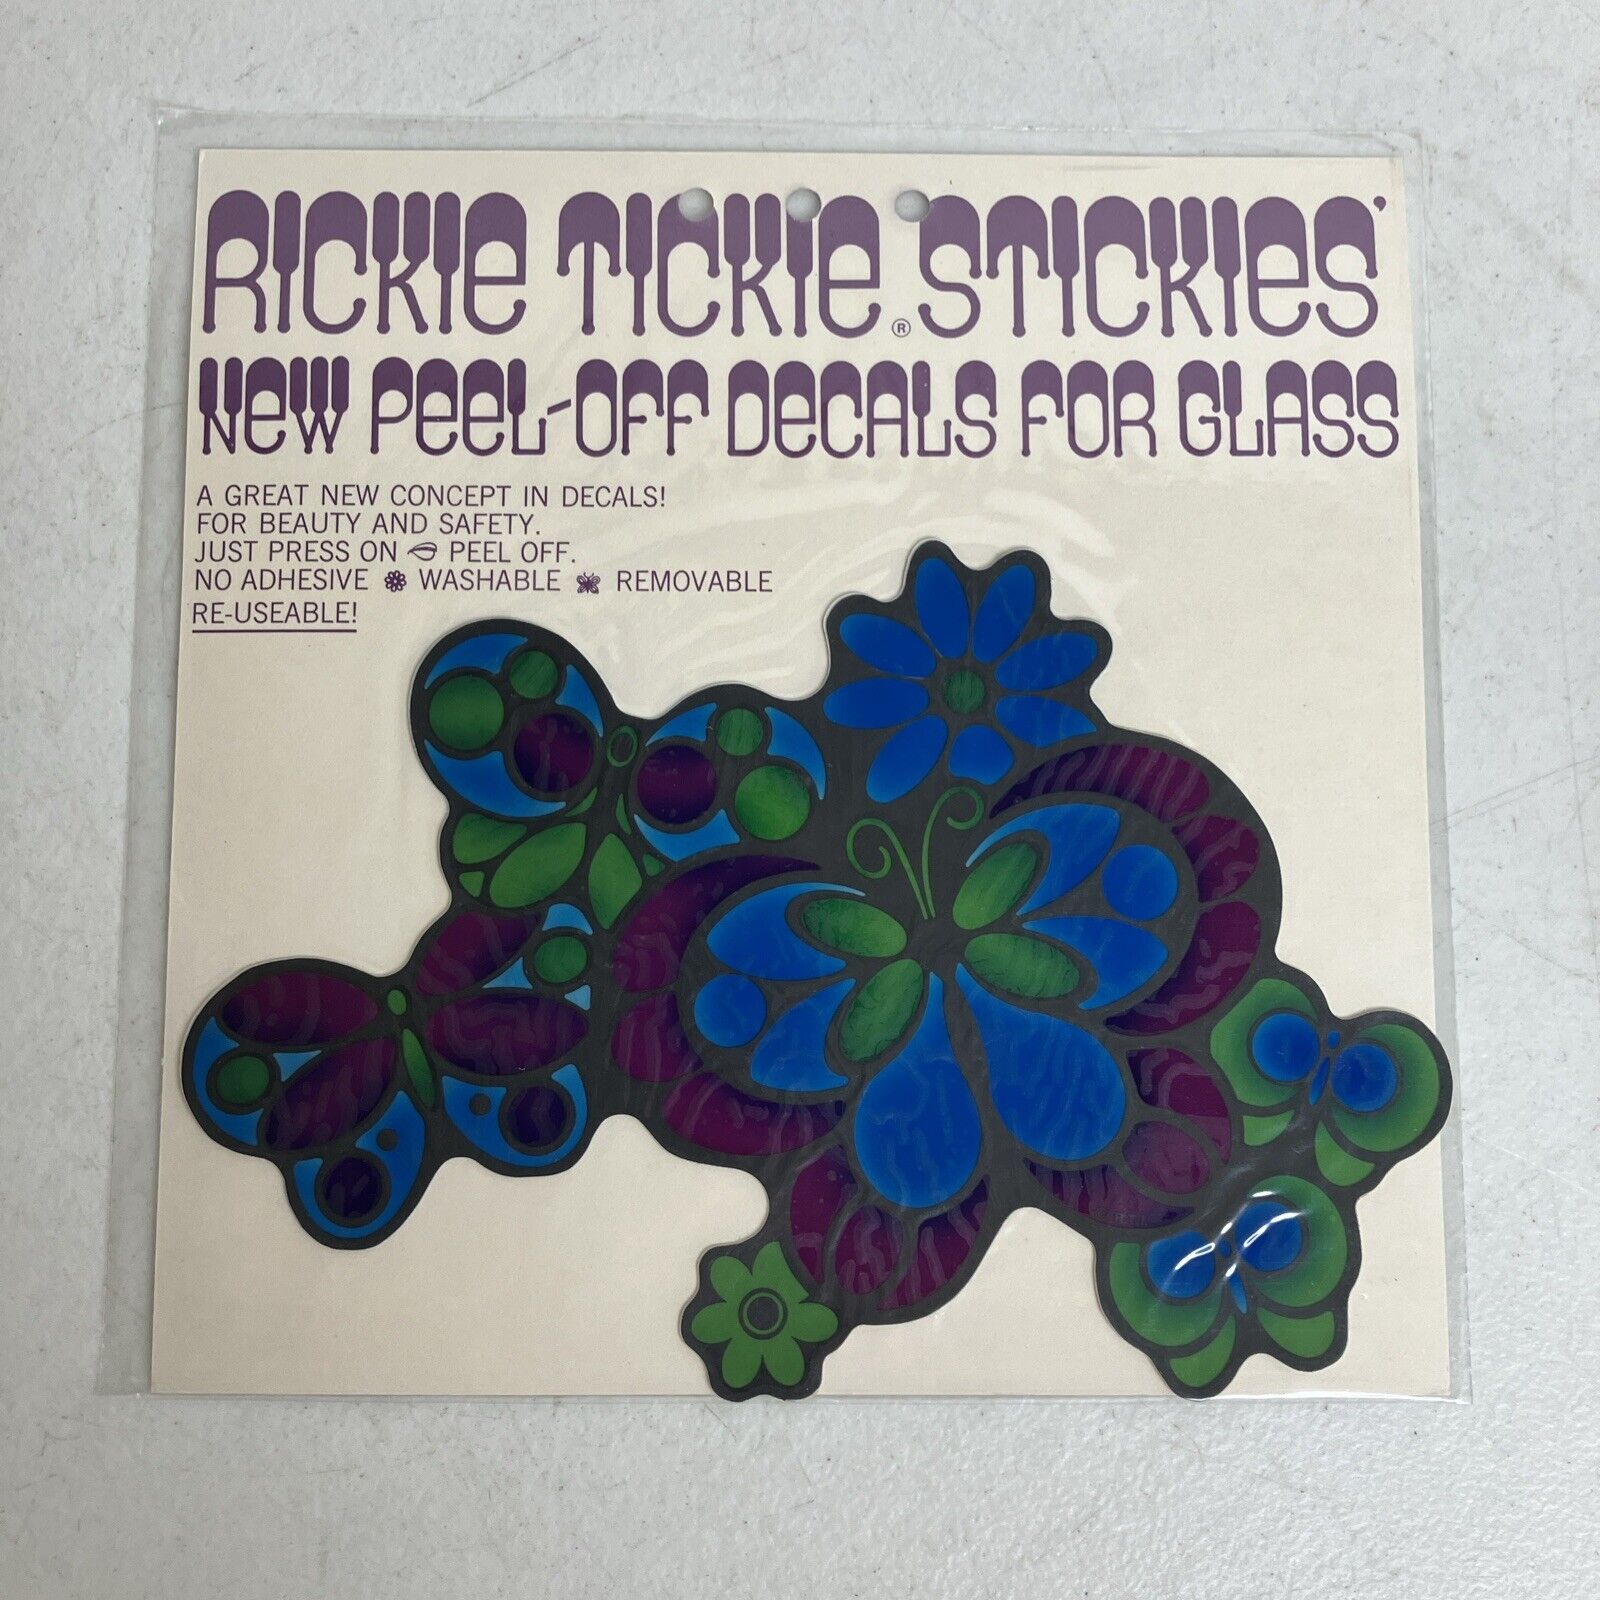 NOS Vintage 1970 Pop Art Rickie Tickie Stickies Psychedelic Flowers Stickers